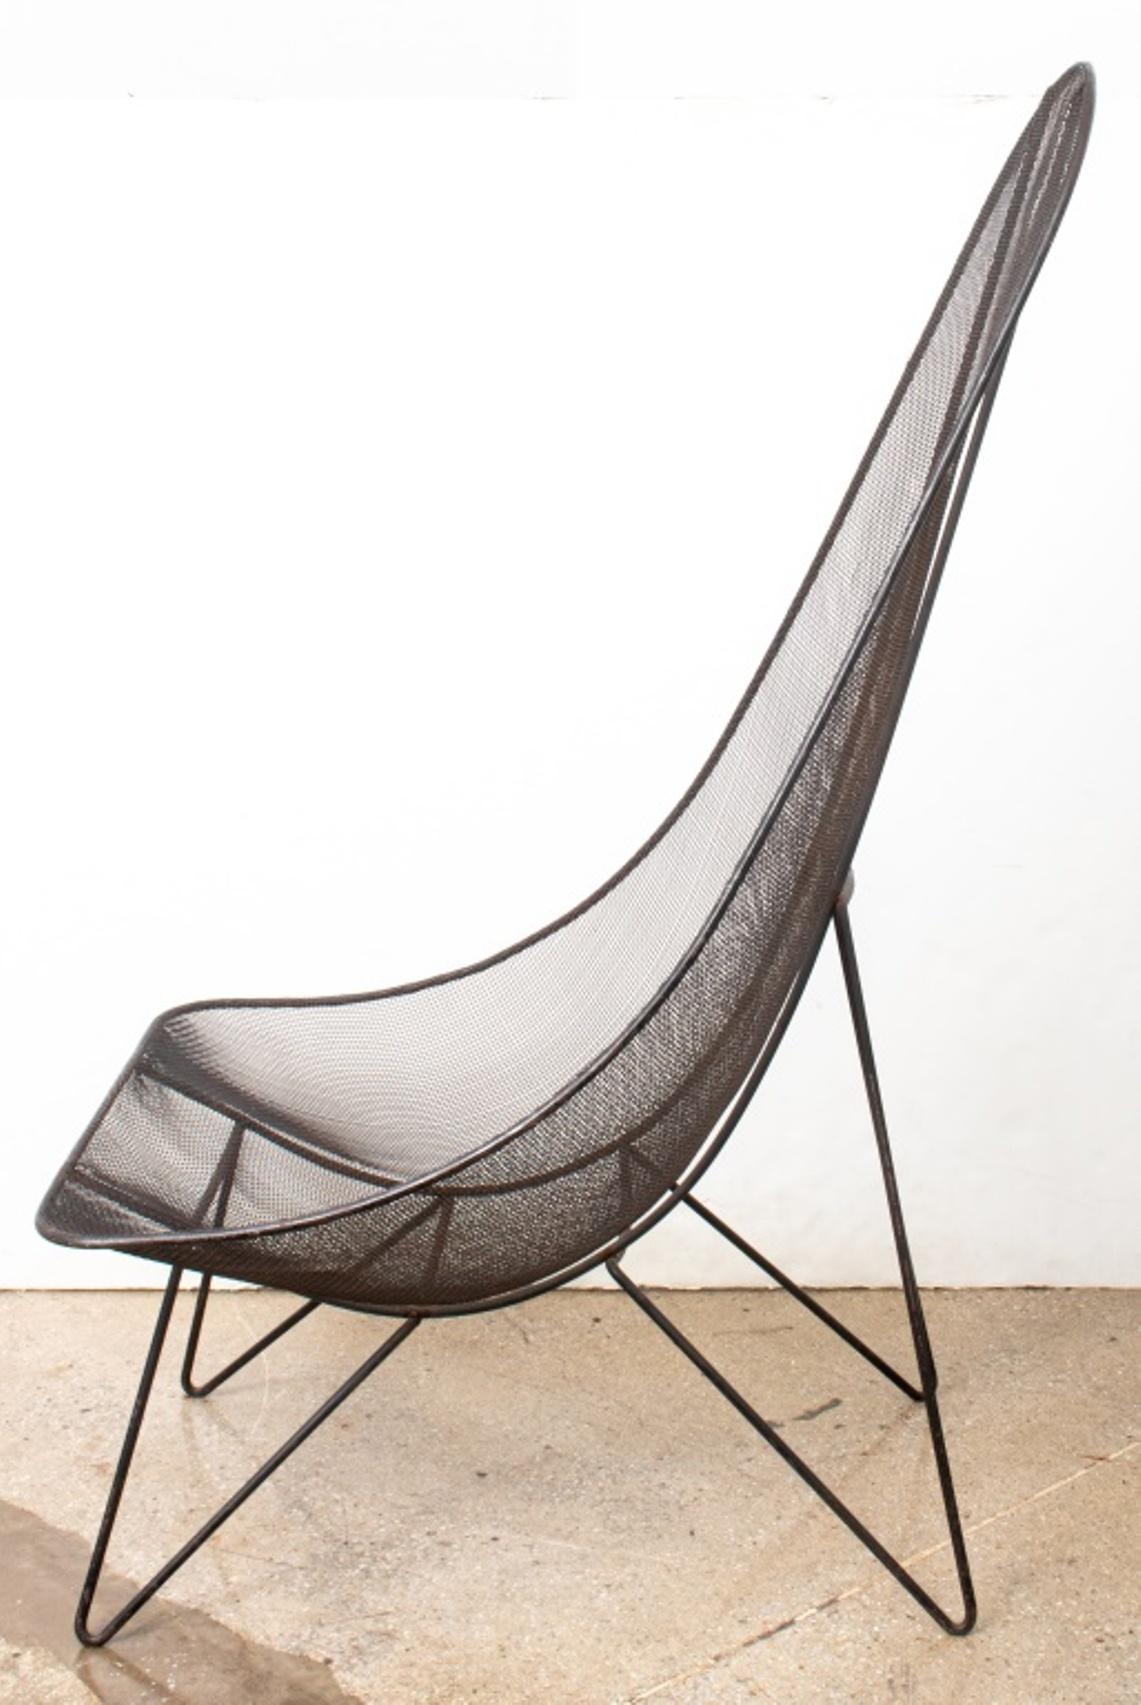 Sol Bloom high back scoop chair in black mesh enameled iron.

Dimensions: 38.5